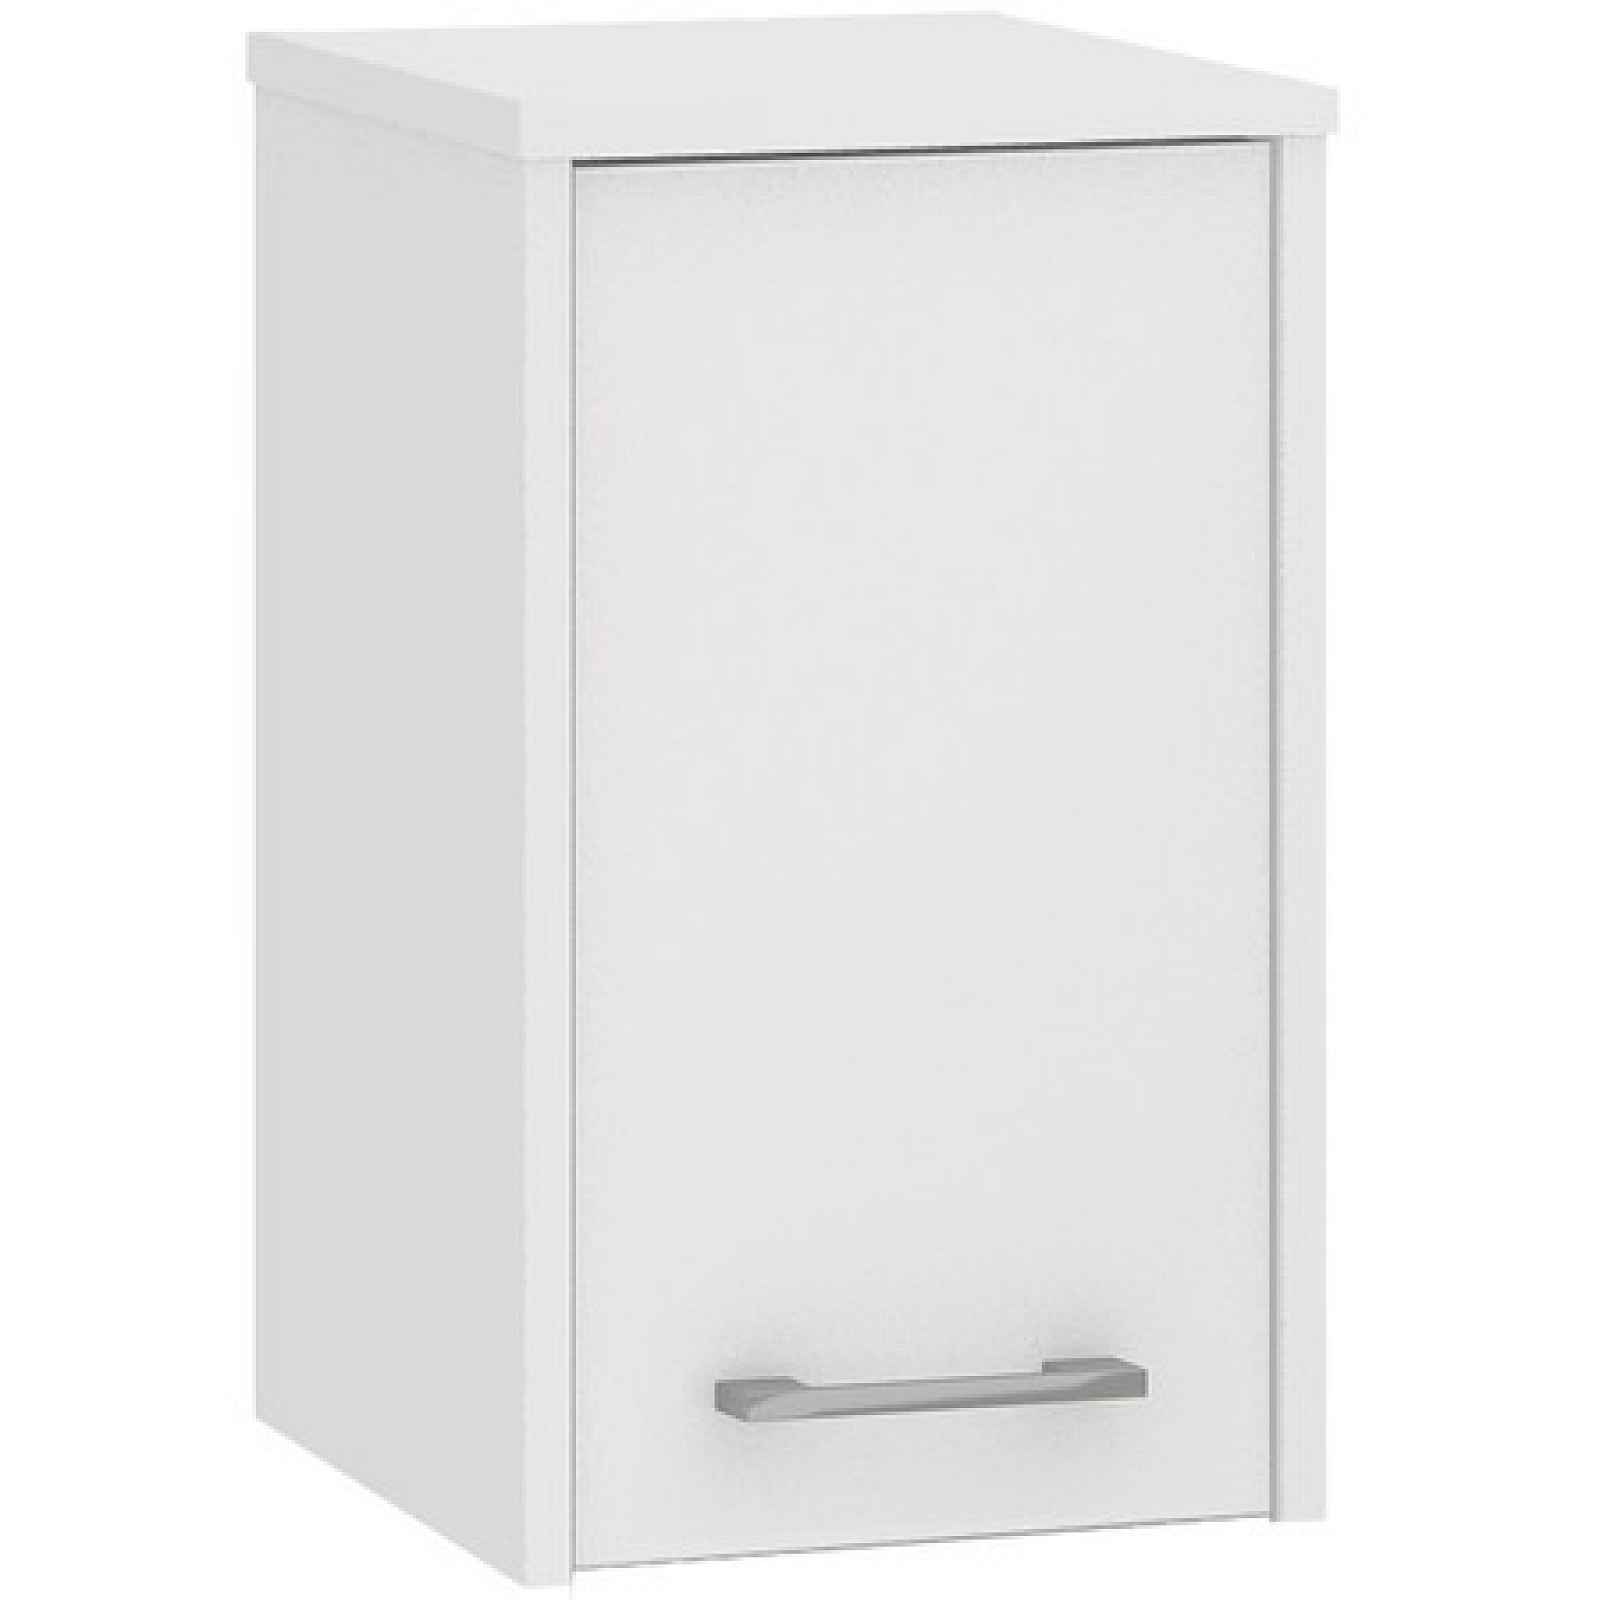 Koupelnová skříňka W 30cm FIN bílá